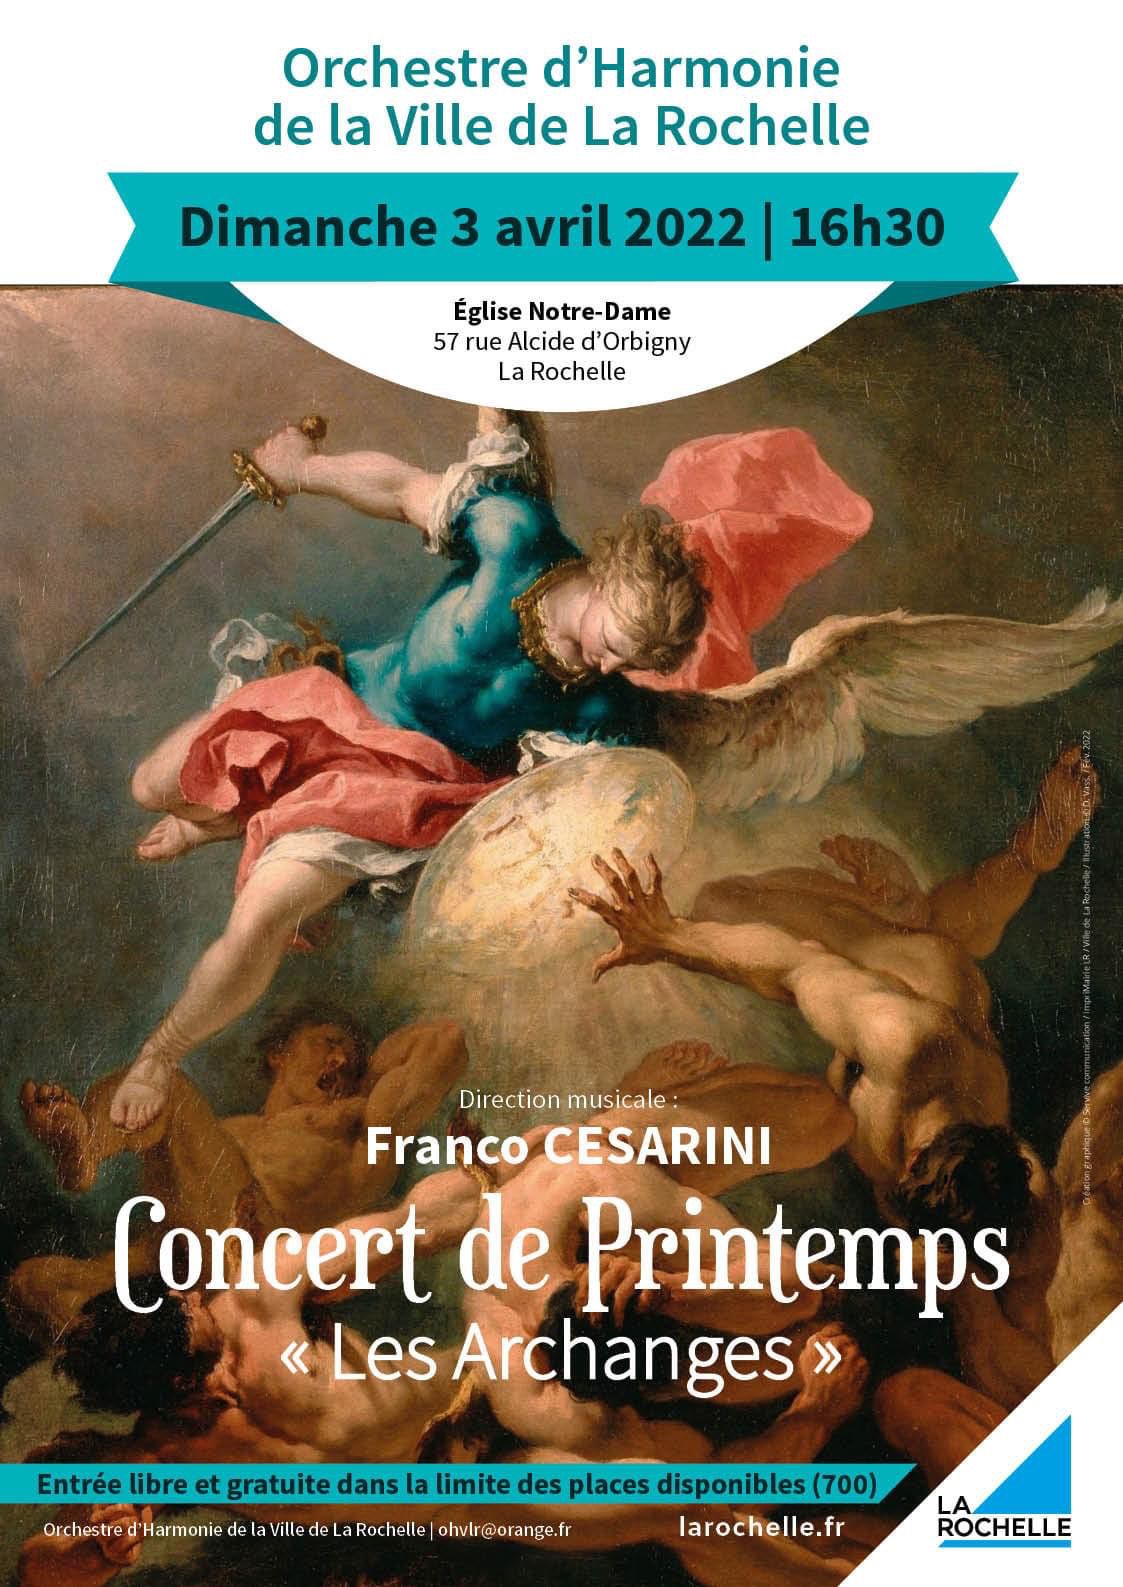 Franco Cesarini Concert de Printemps La Rochelle